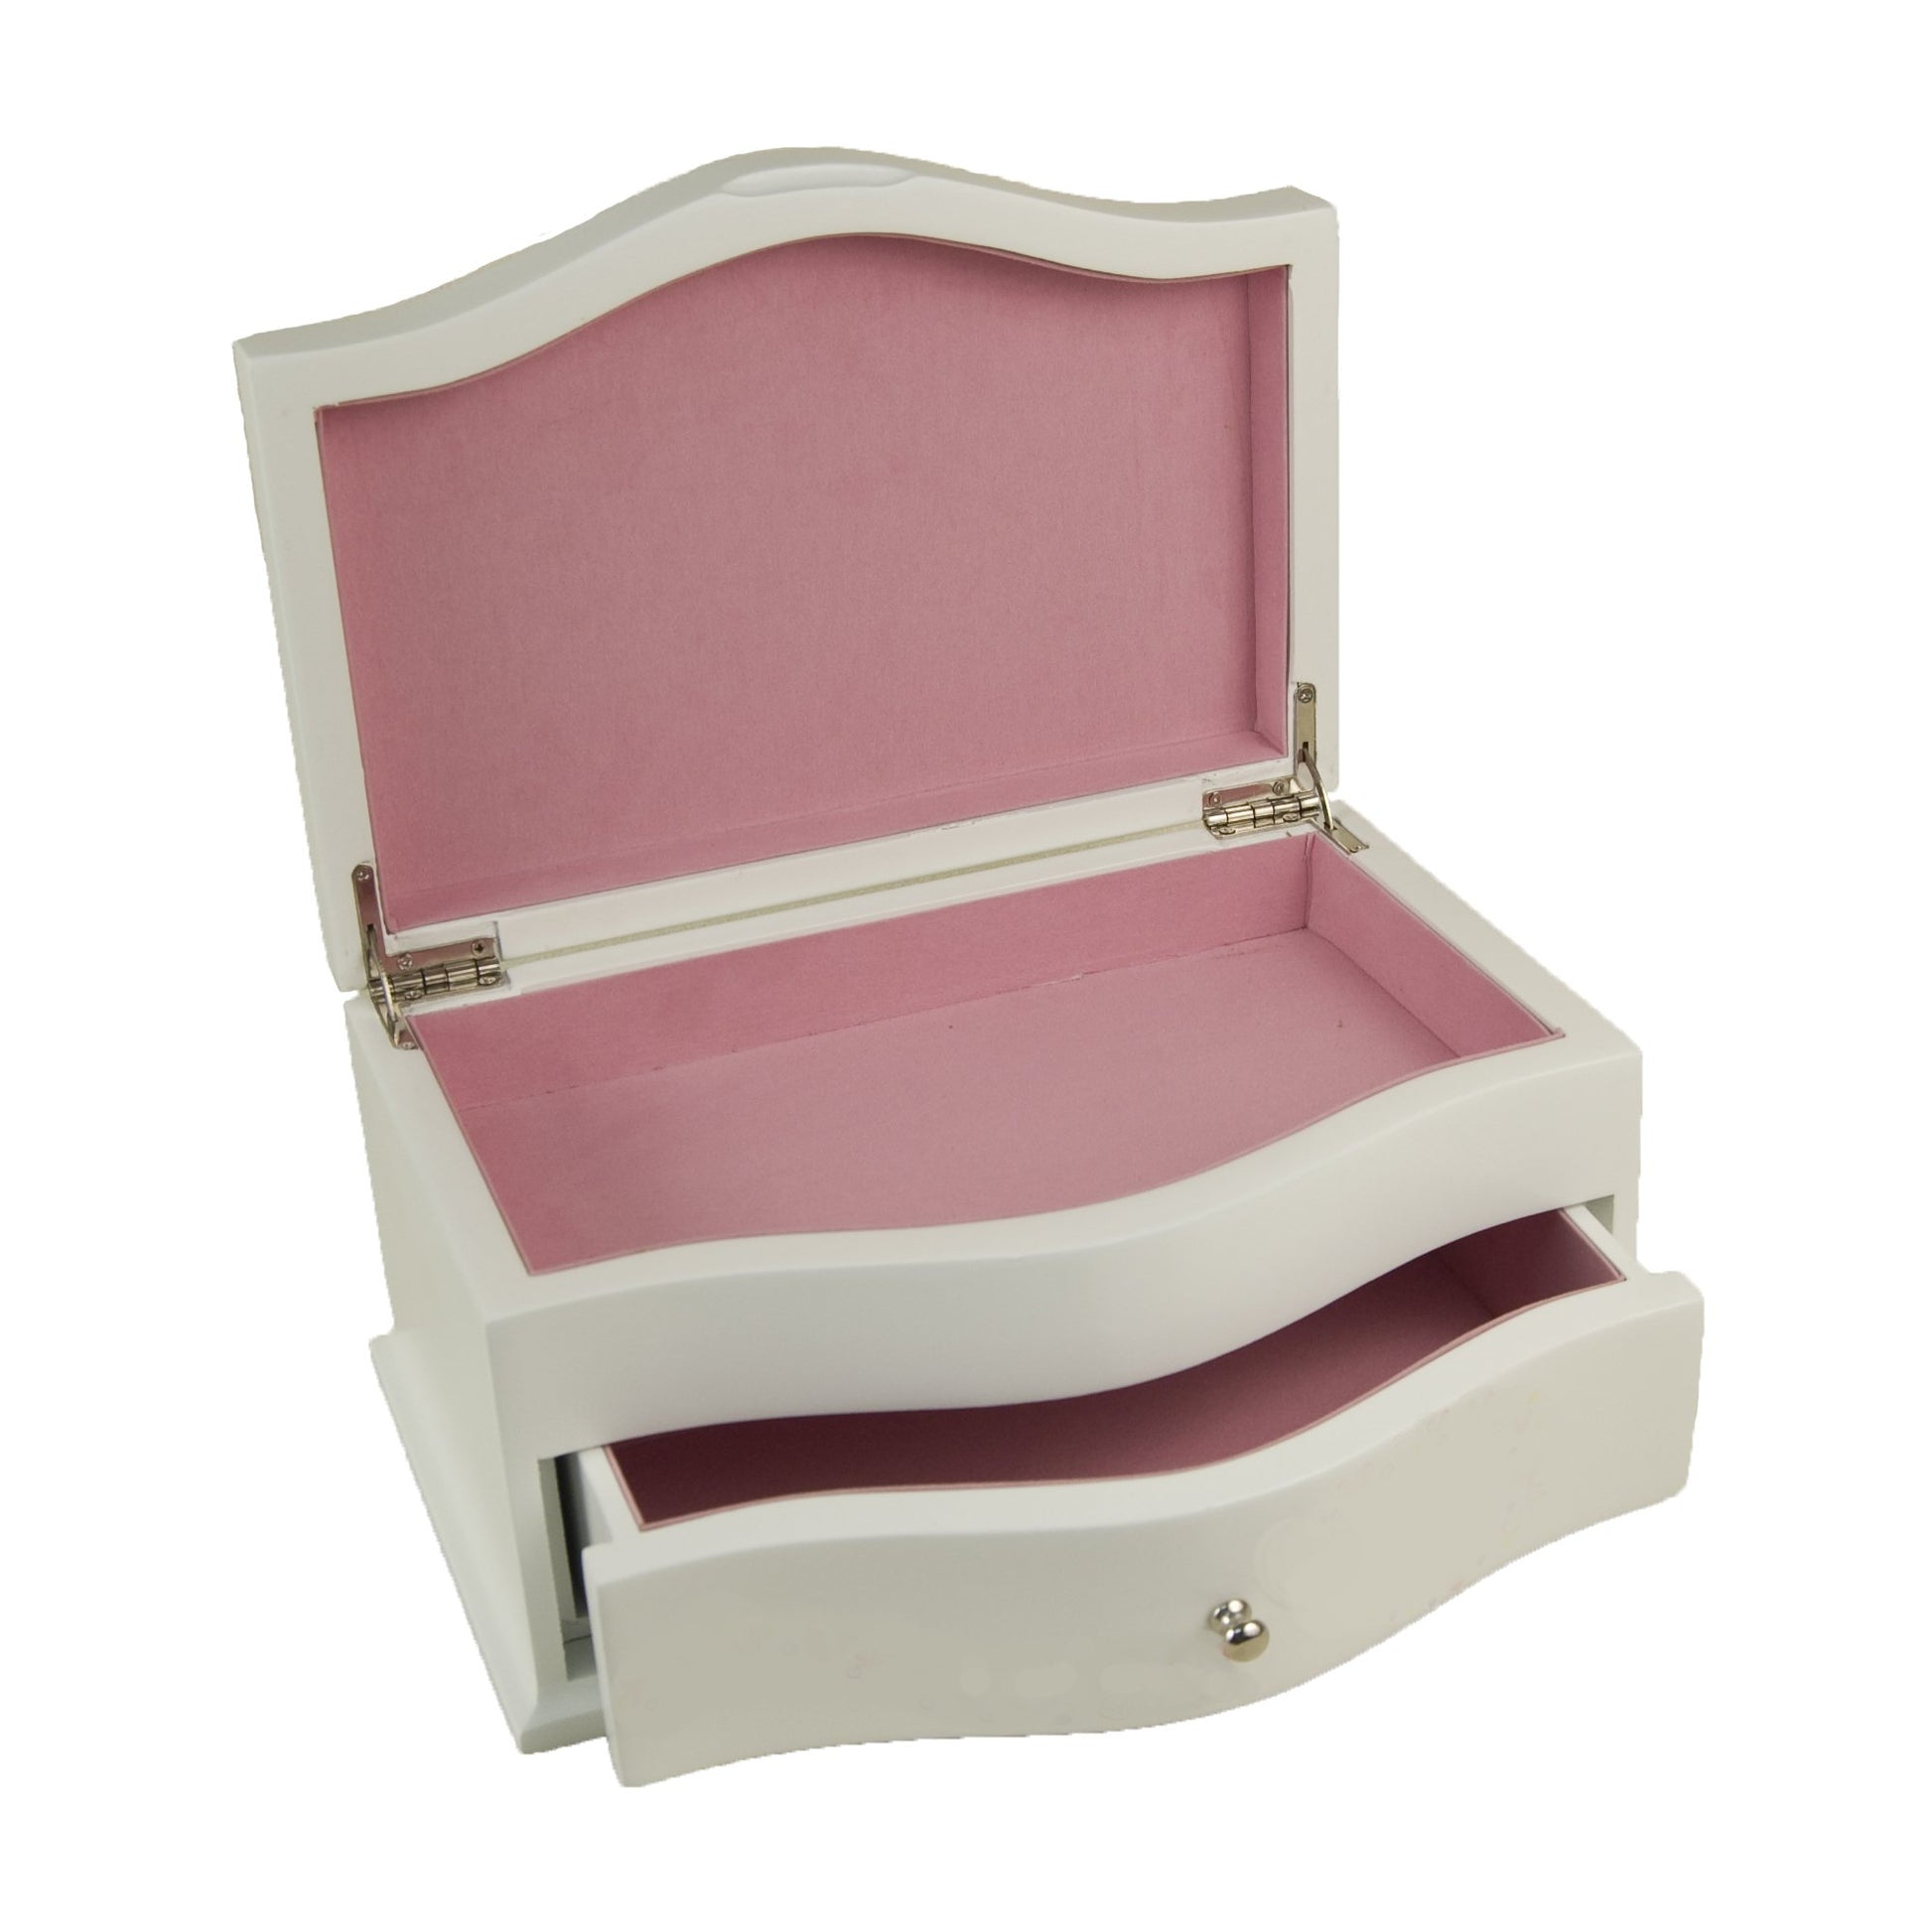 Princess Girls Jewelry Box with Swan design